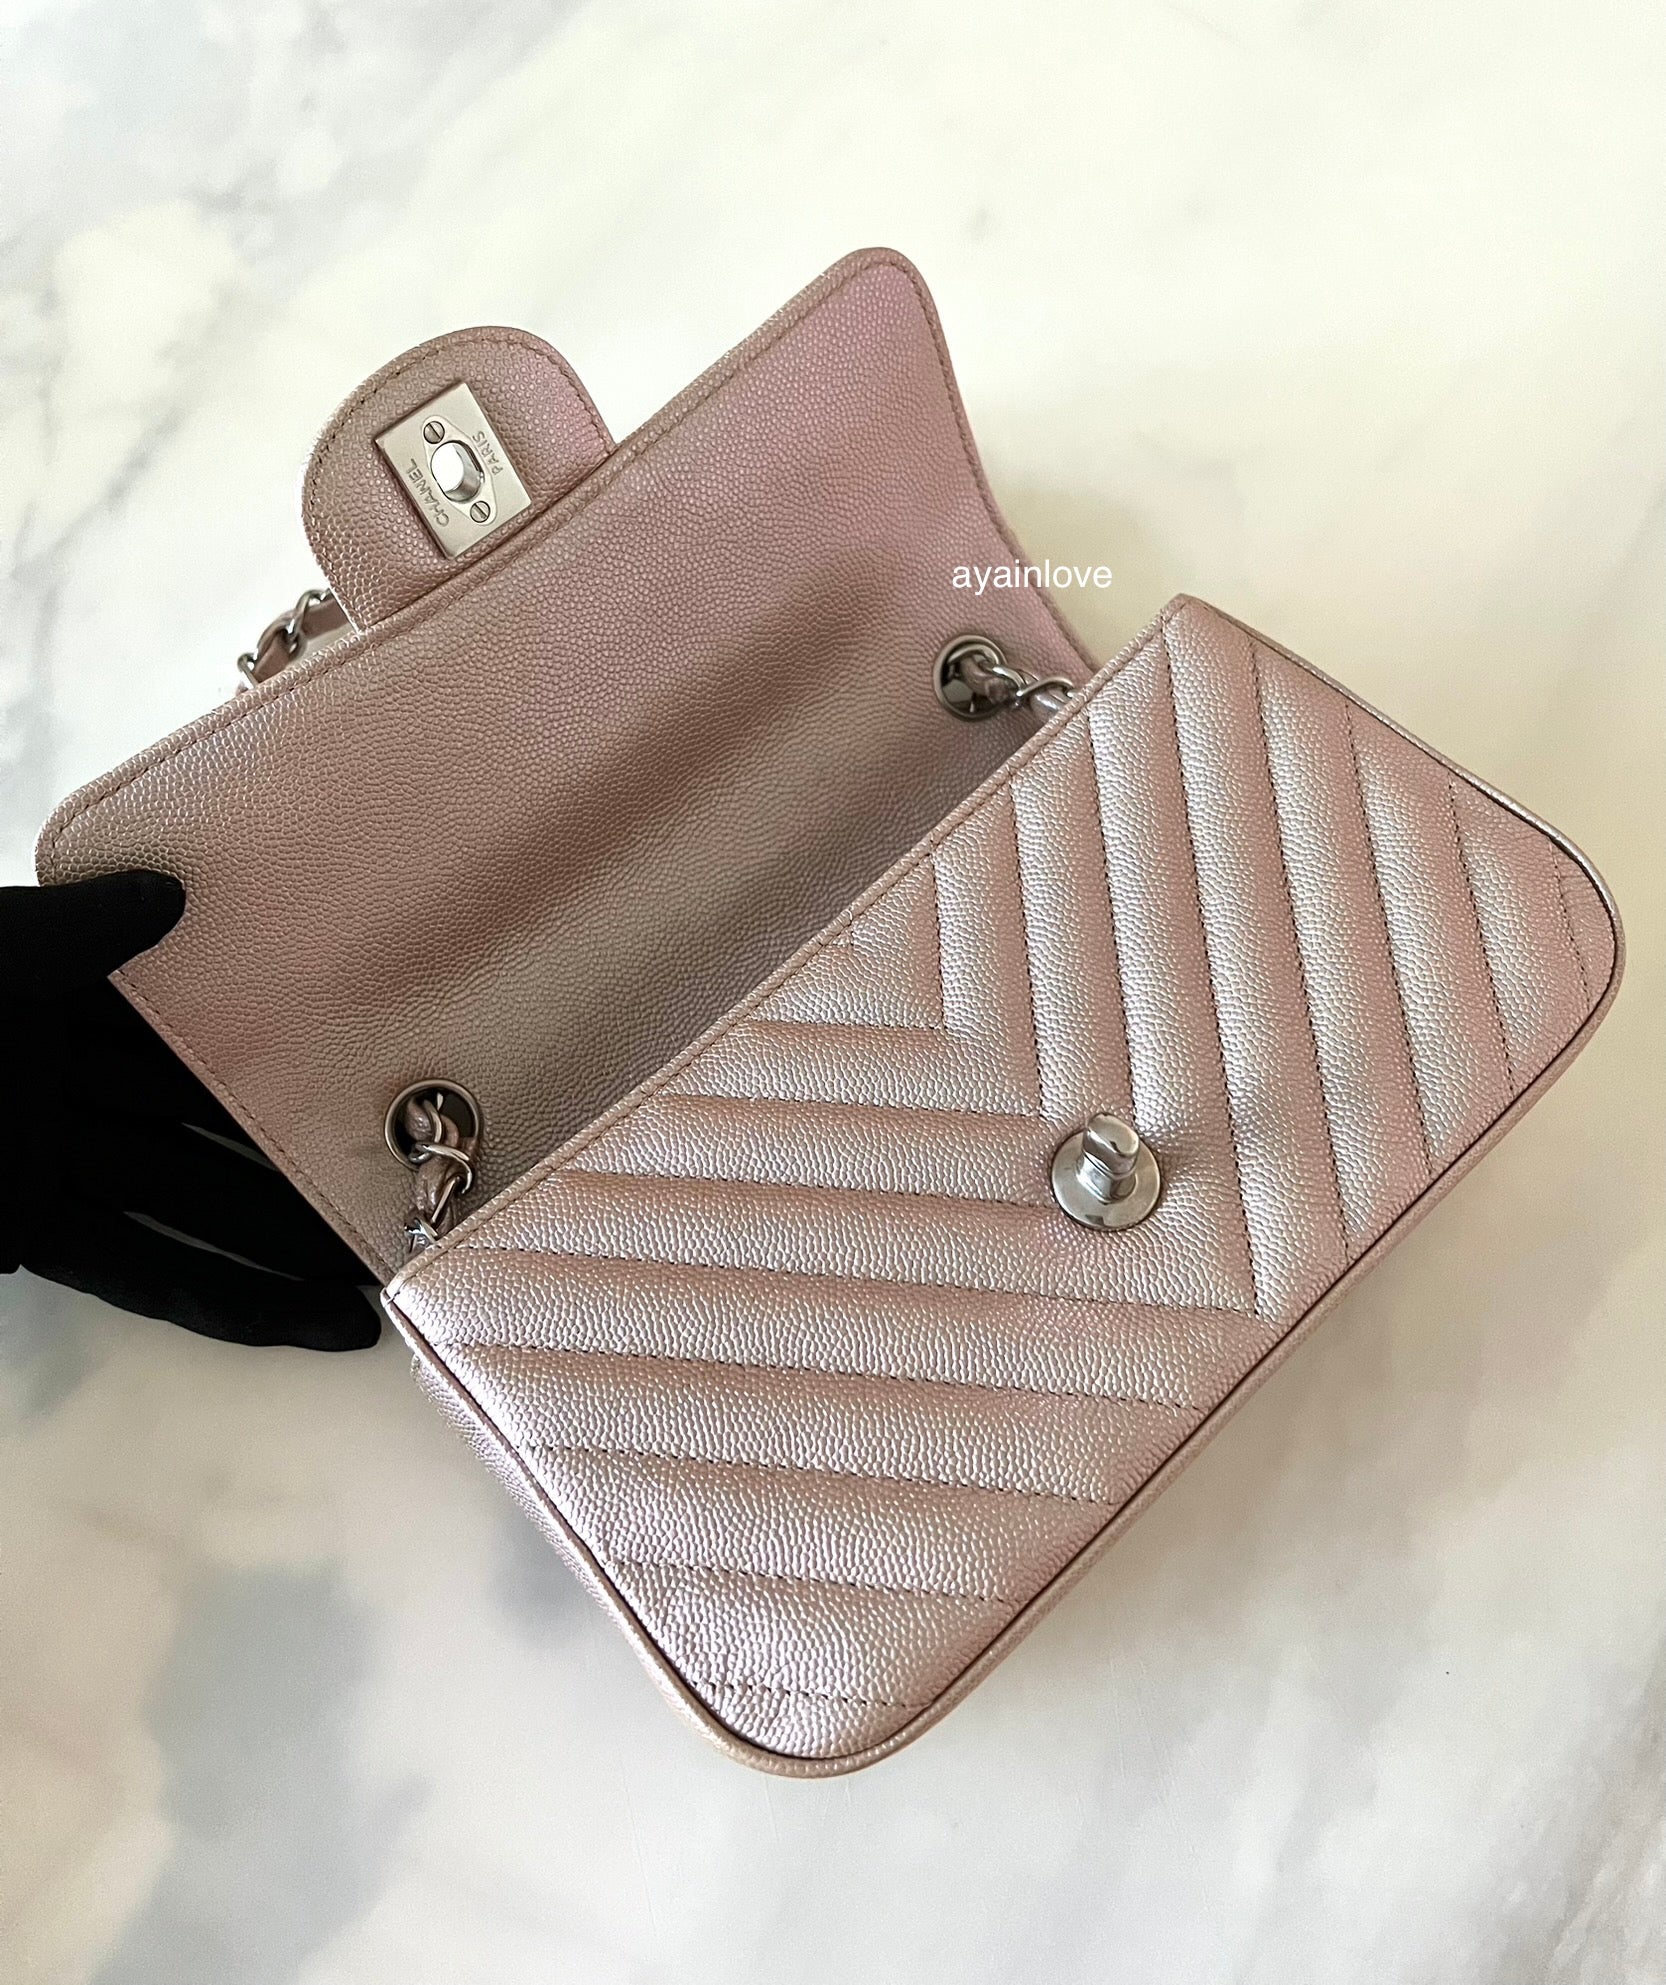 CHANEL, Bags, Chanel Rose Gold Mini Flap Bag 7b